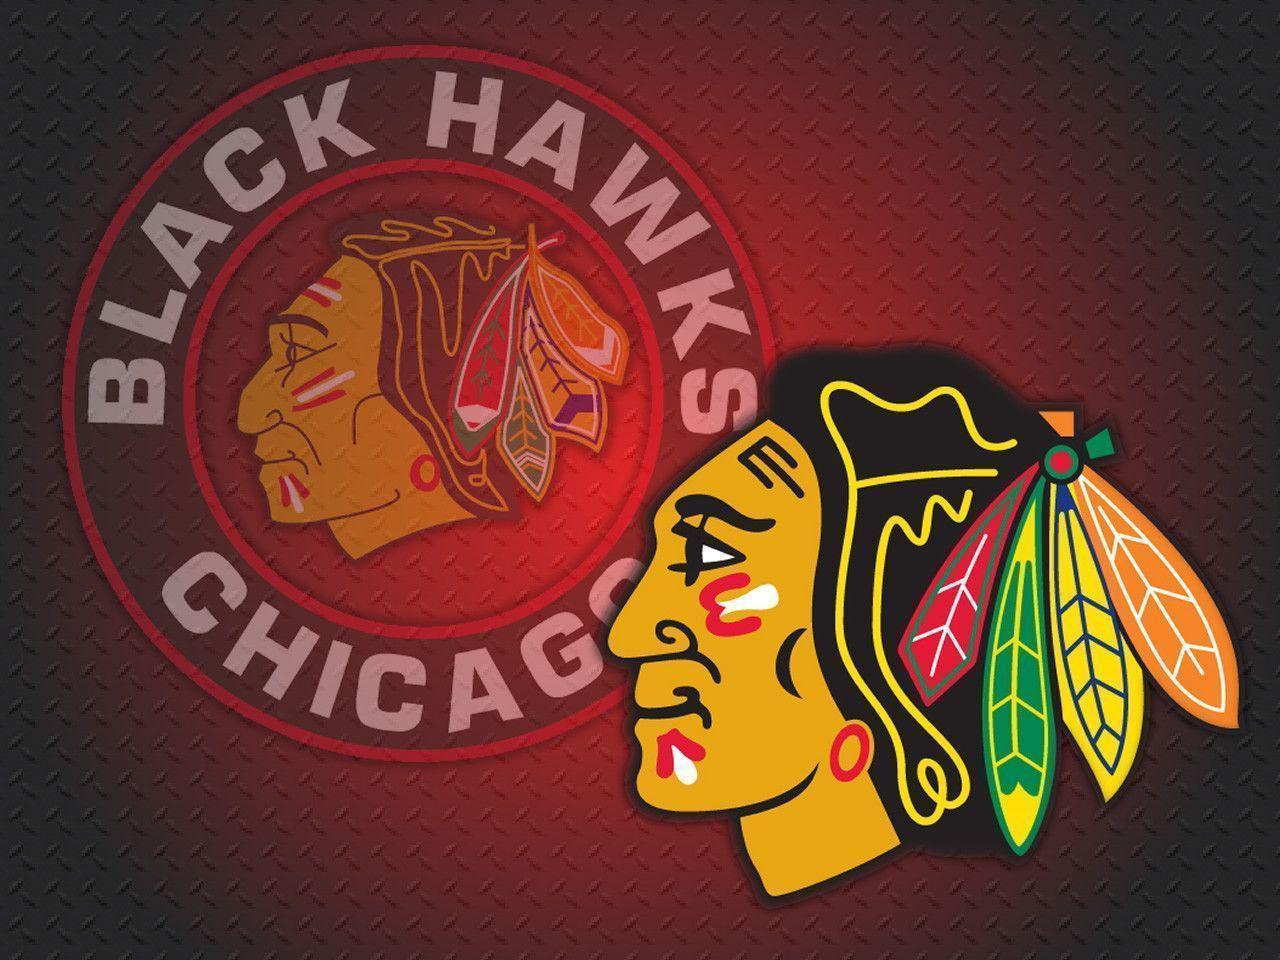 Enjoy this new Chicago Blackhawks desktop background. Chicago